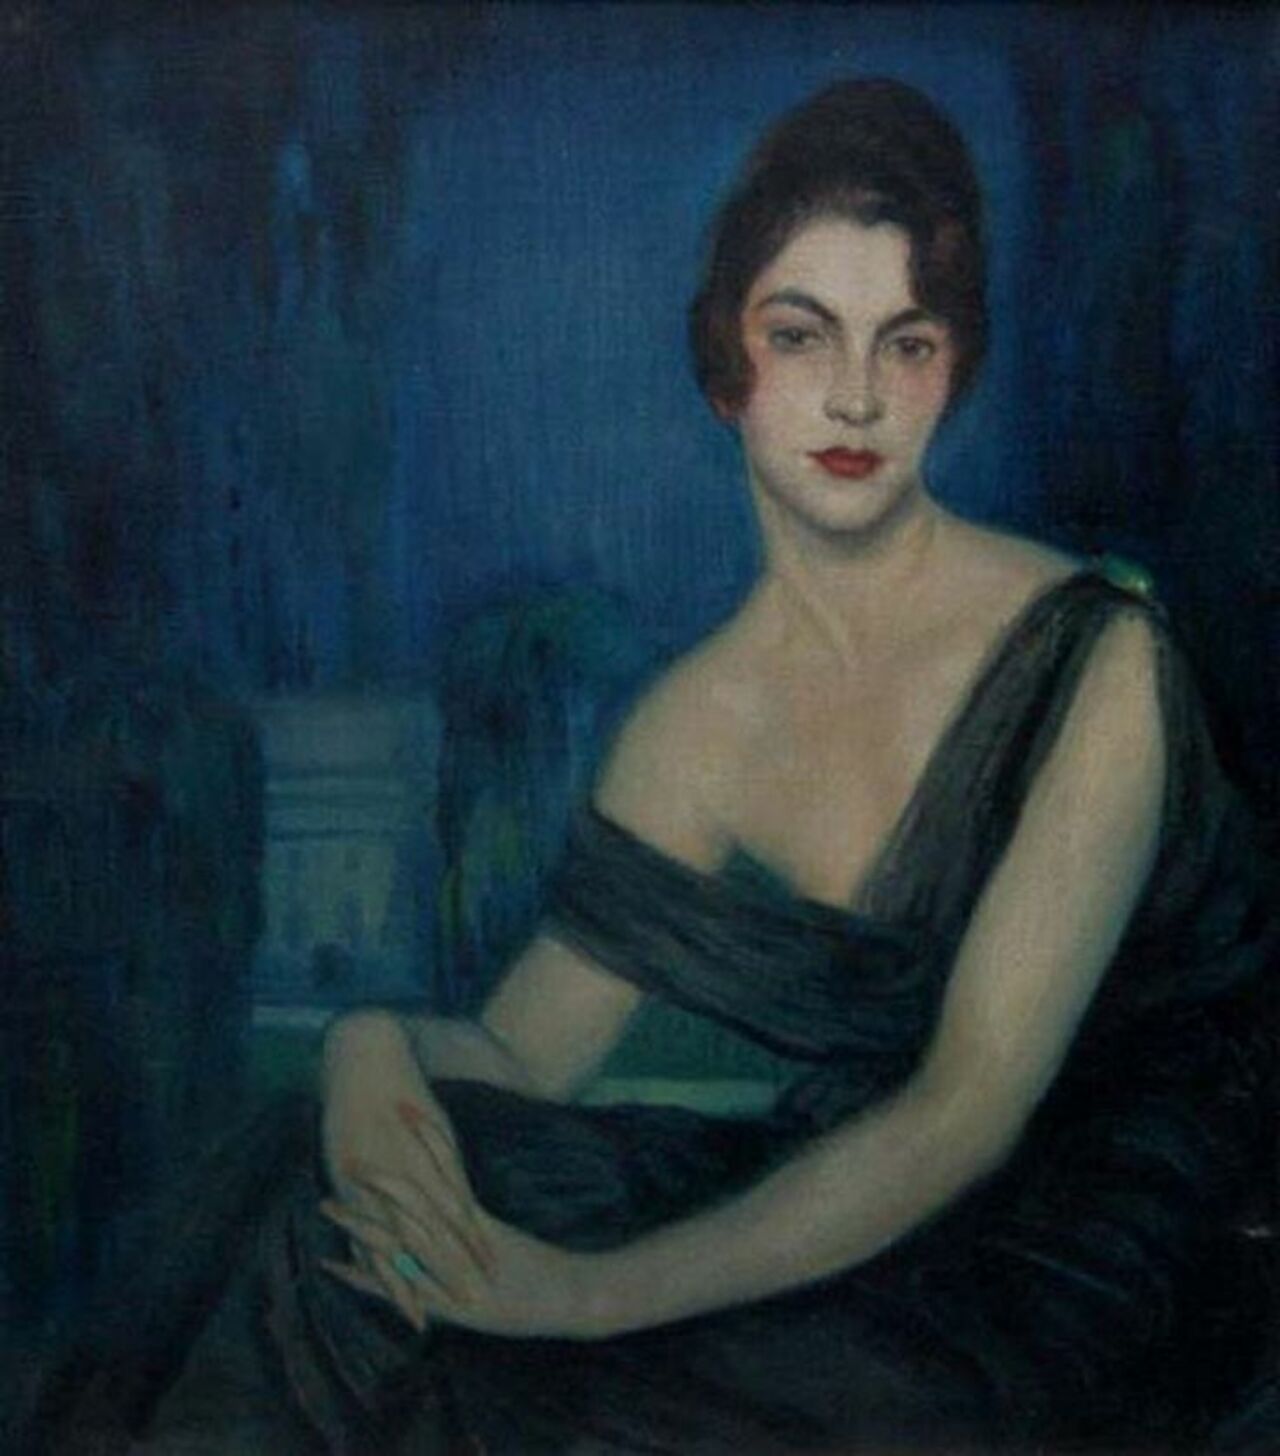 RT @Helisabethhh: Portrait of Elegant Woman, 1918.Federico Beltran Masses (1885-1949)#art #painting #twitart https://t.co/XLPszun8Kc